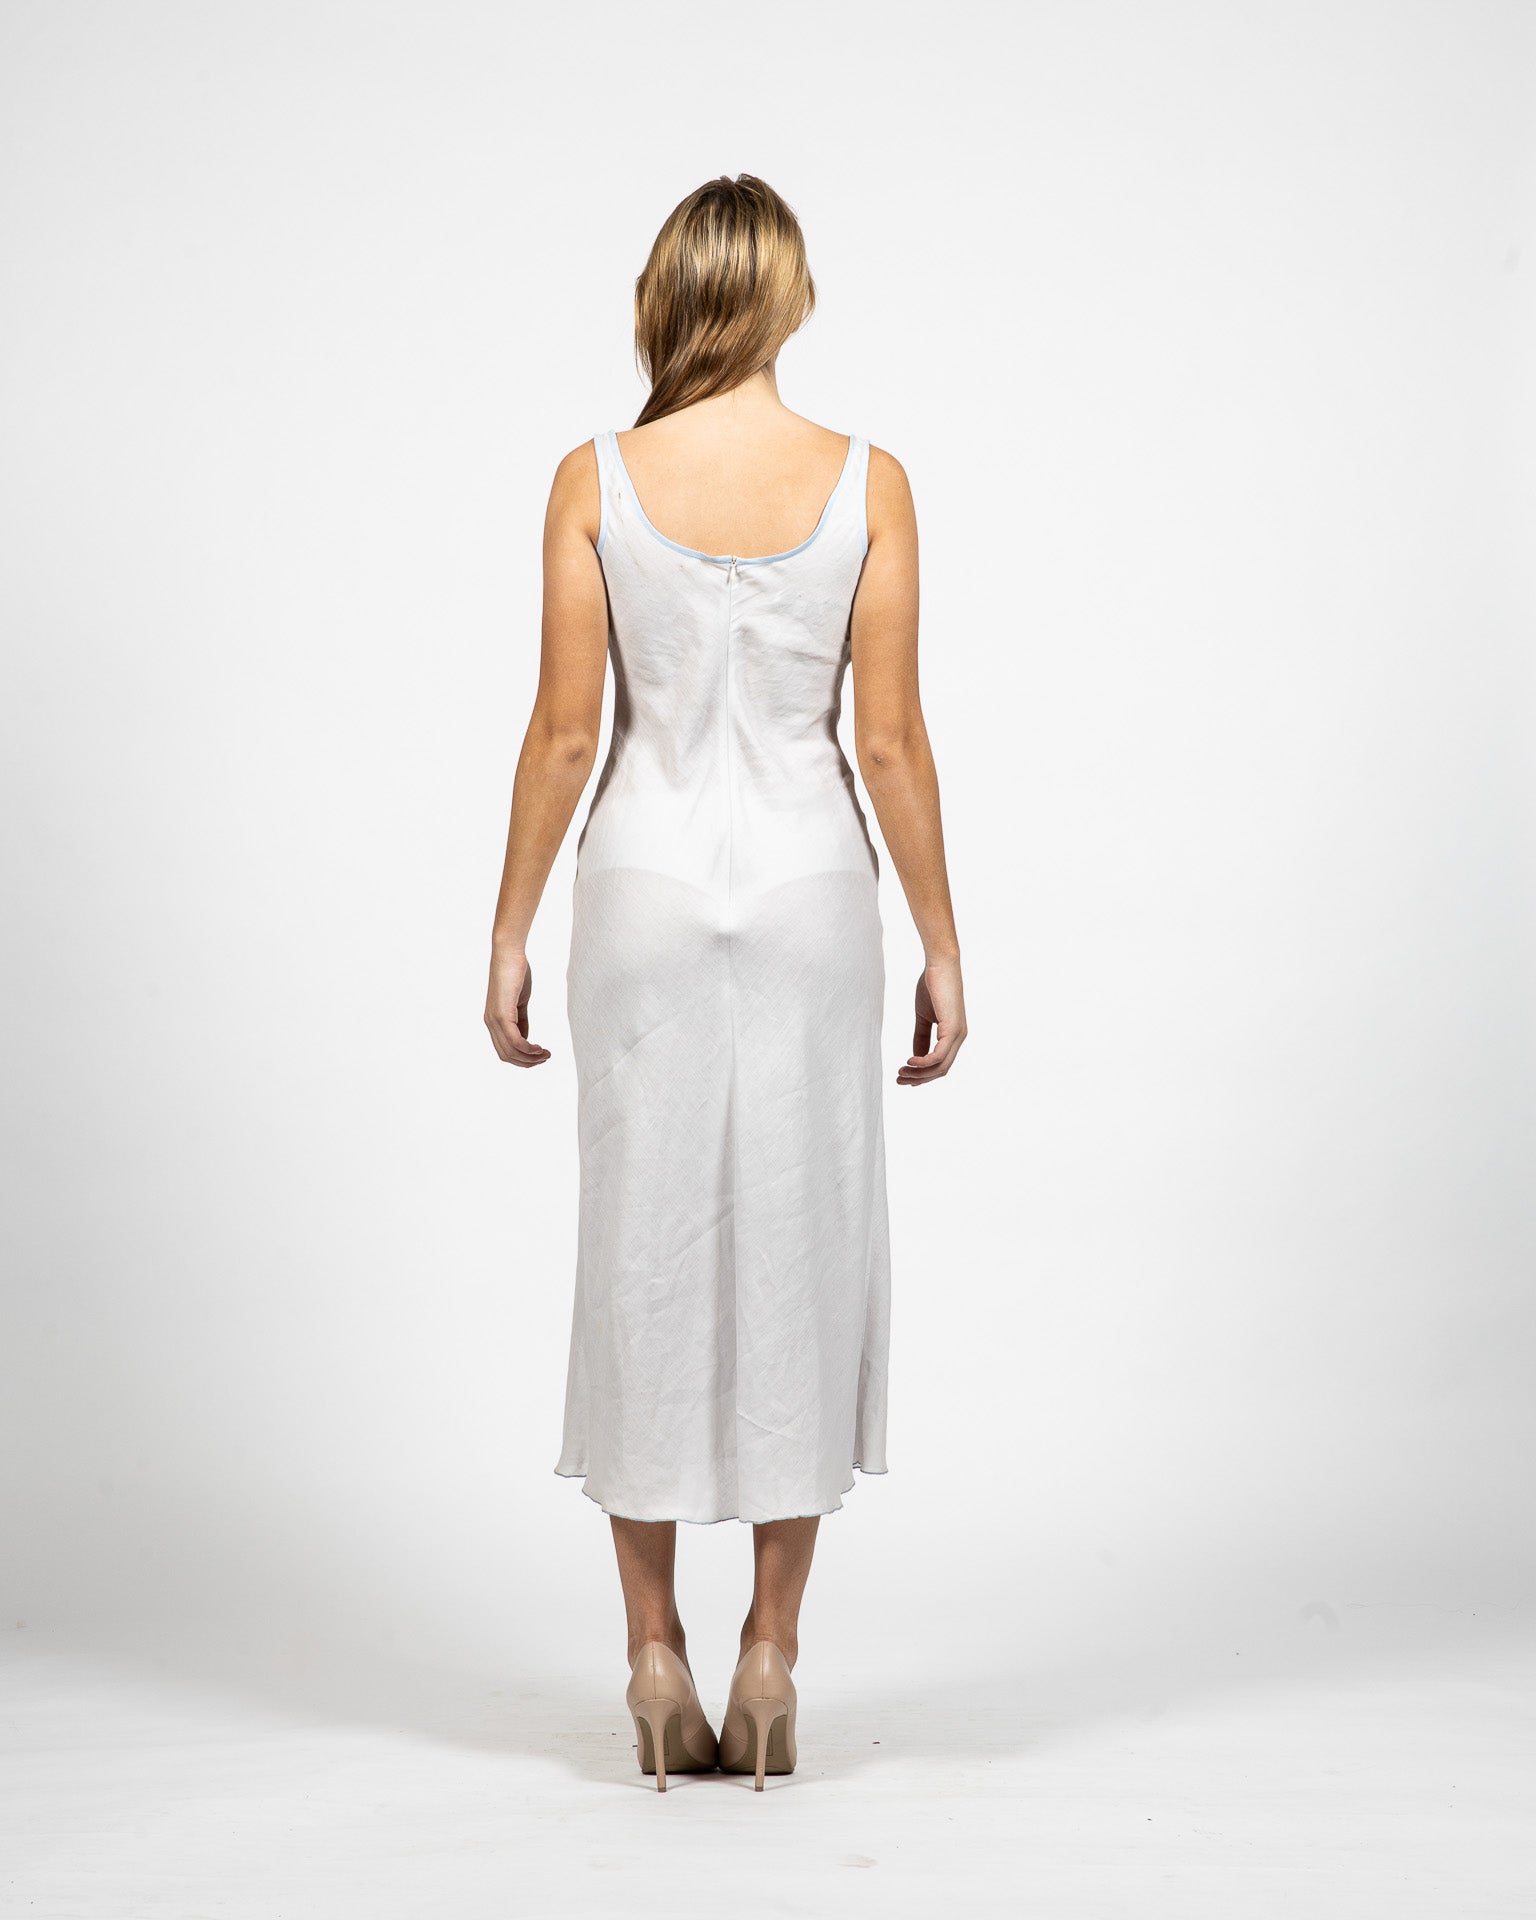 Square Grey Linen Dress - Back View - Samuel Vartan